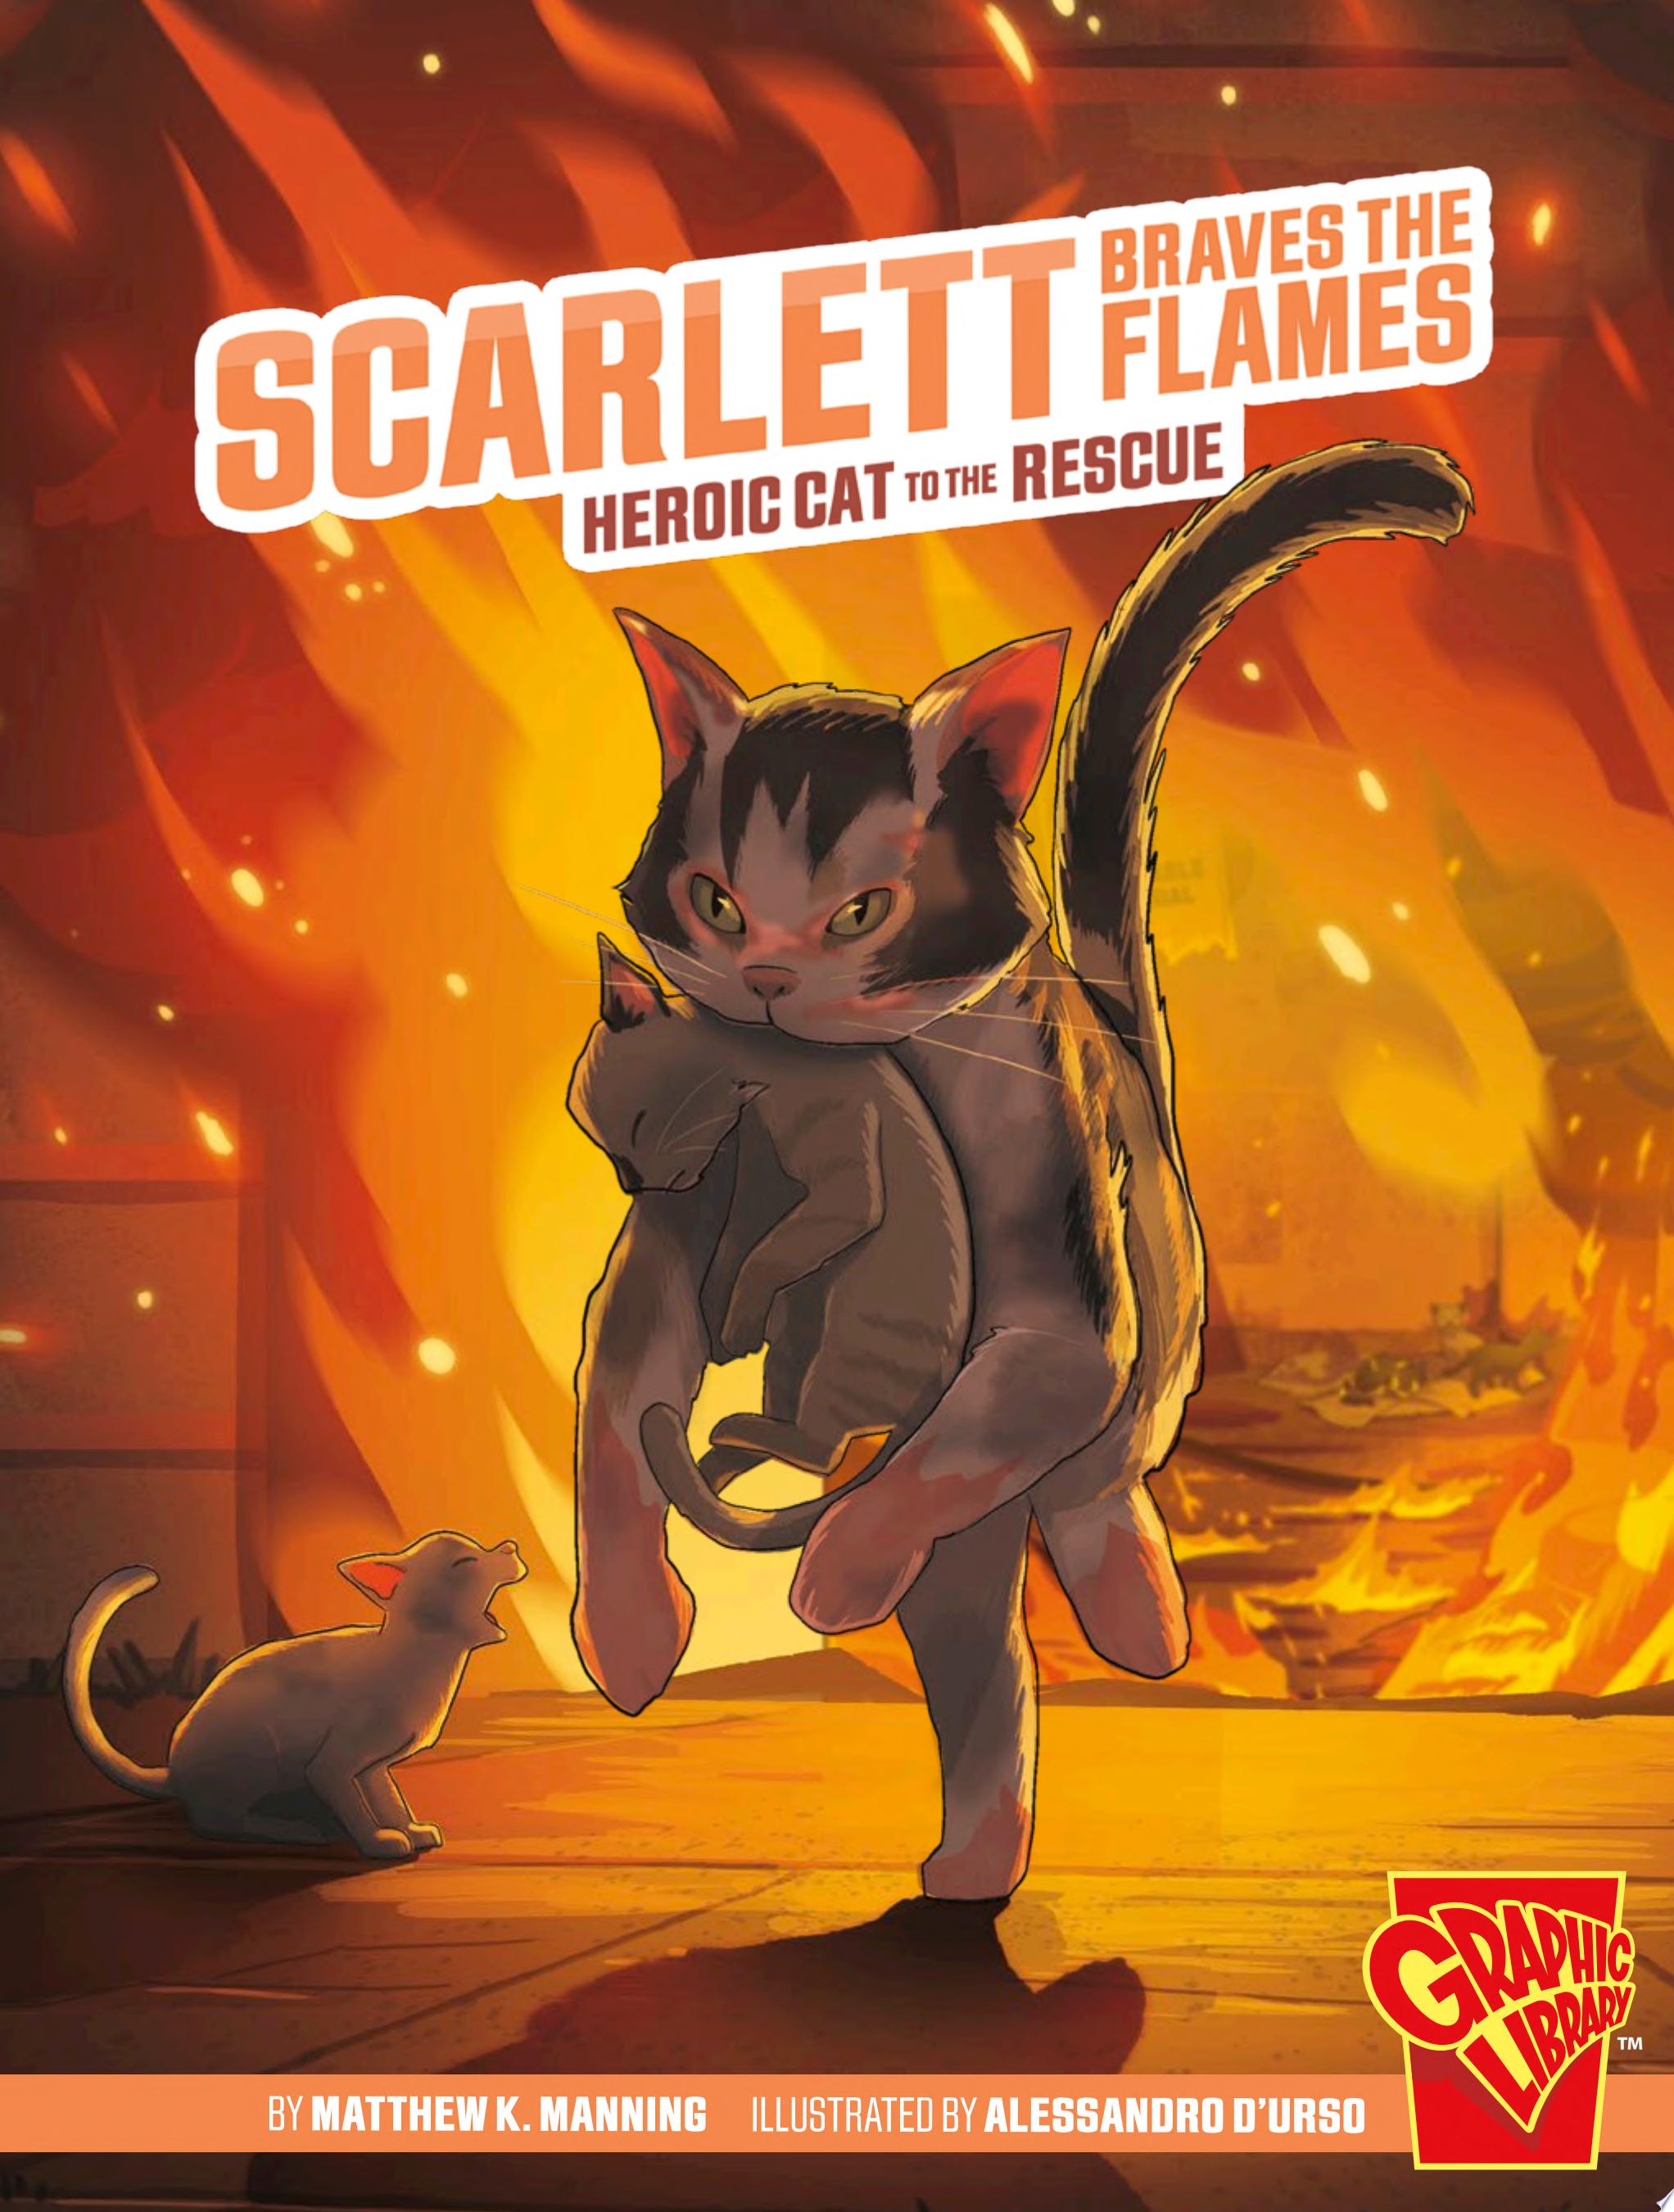 Image for "Scarlett Braves the Flames"